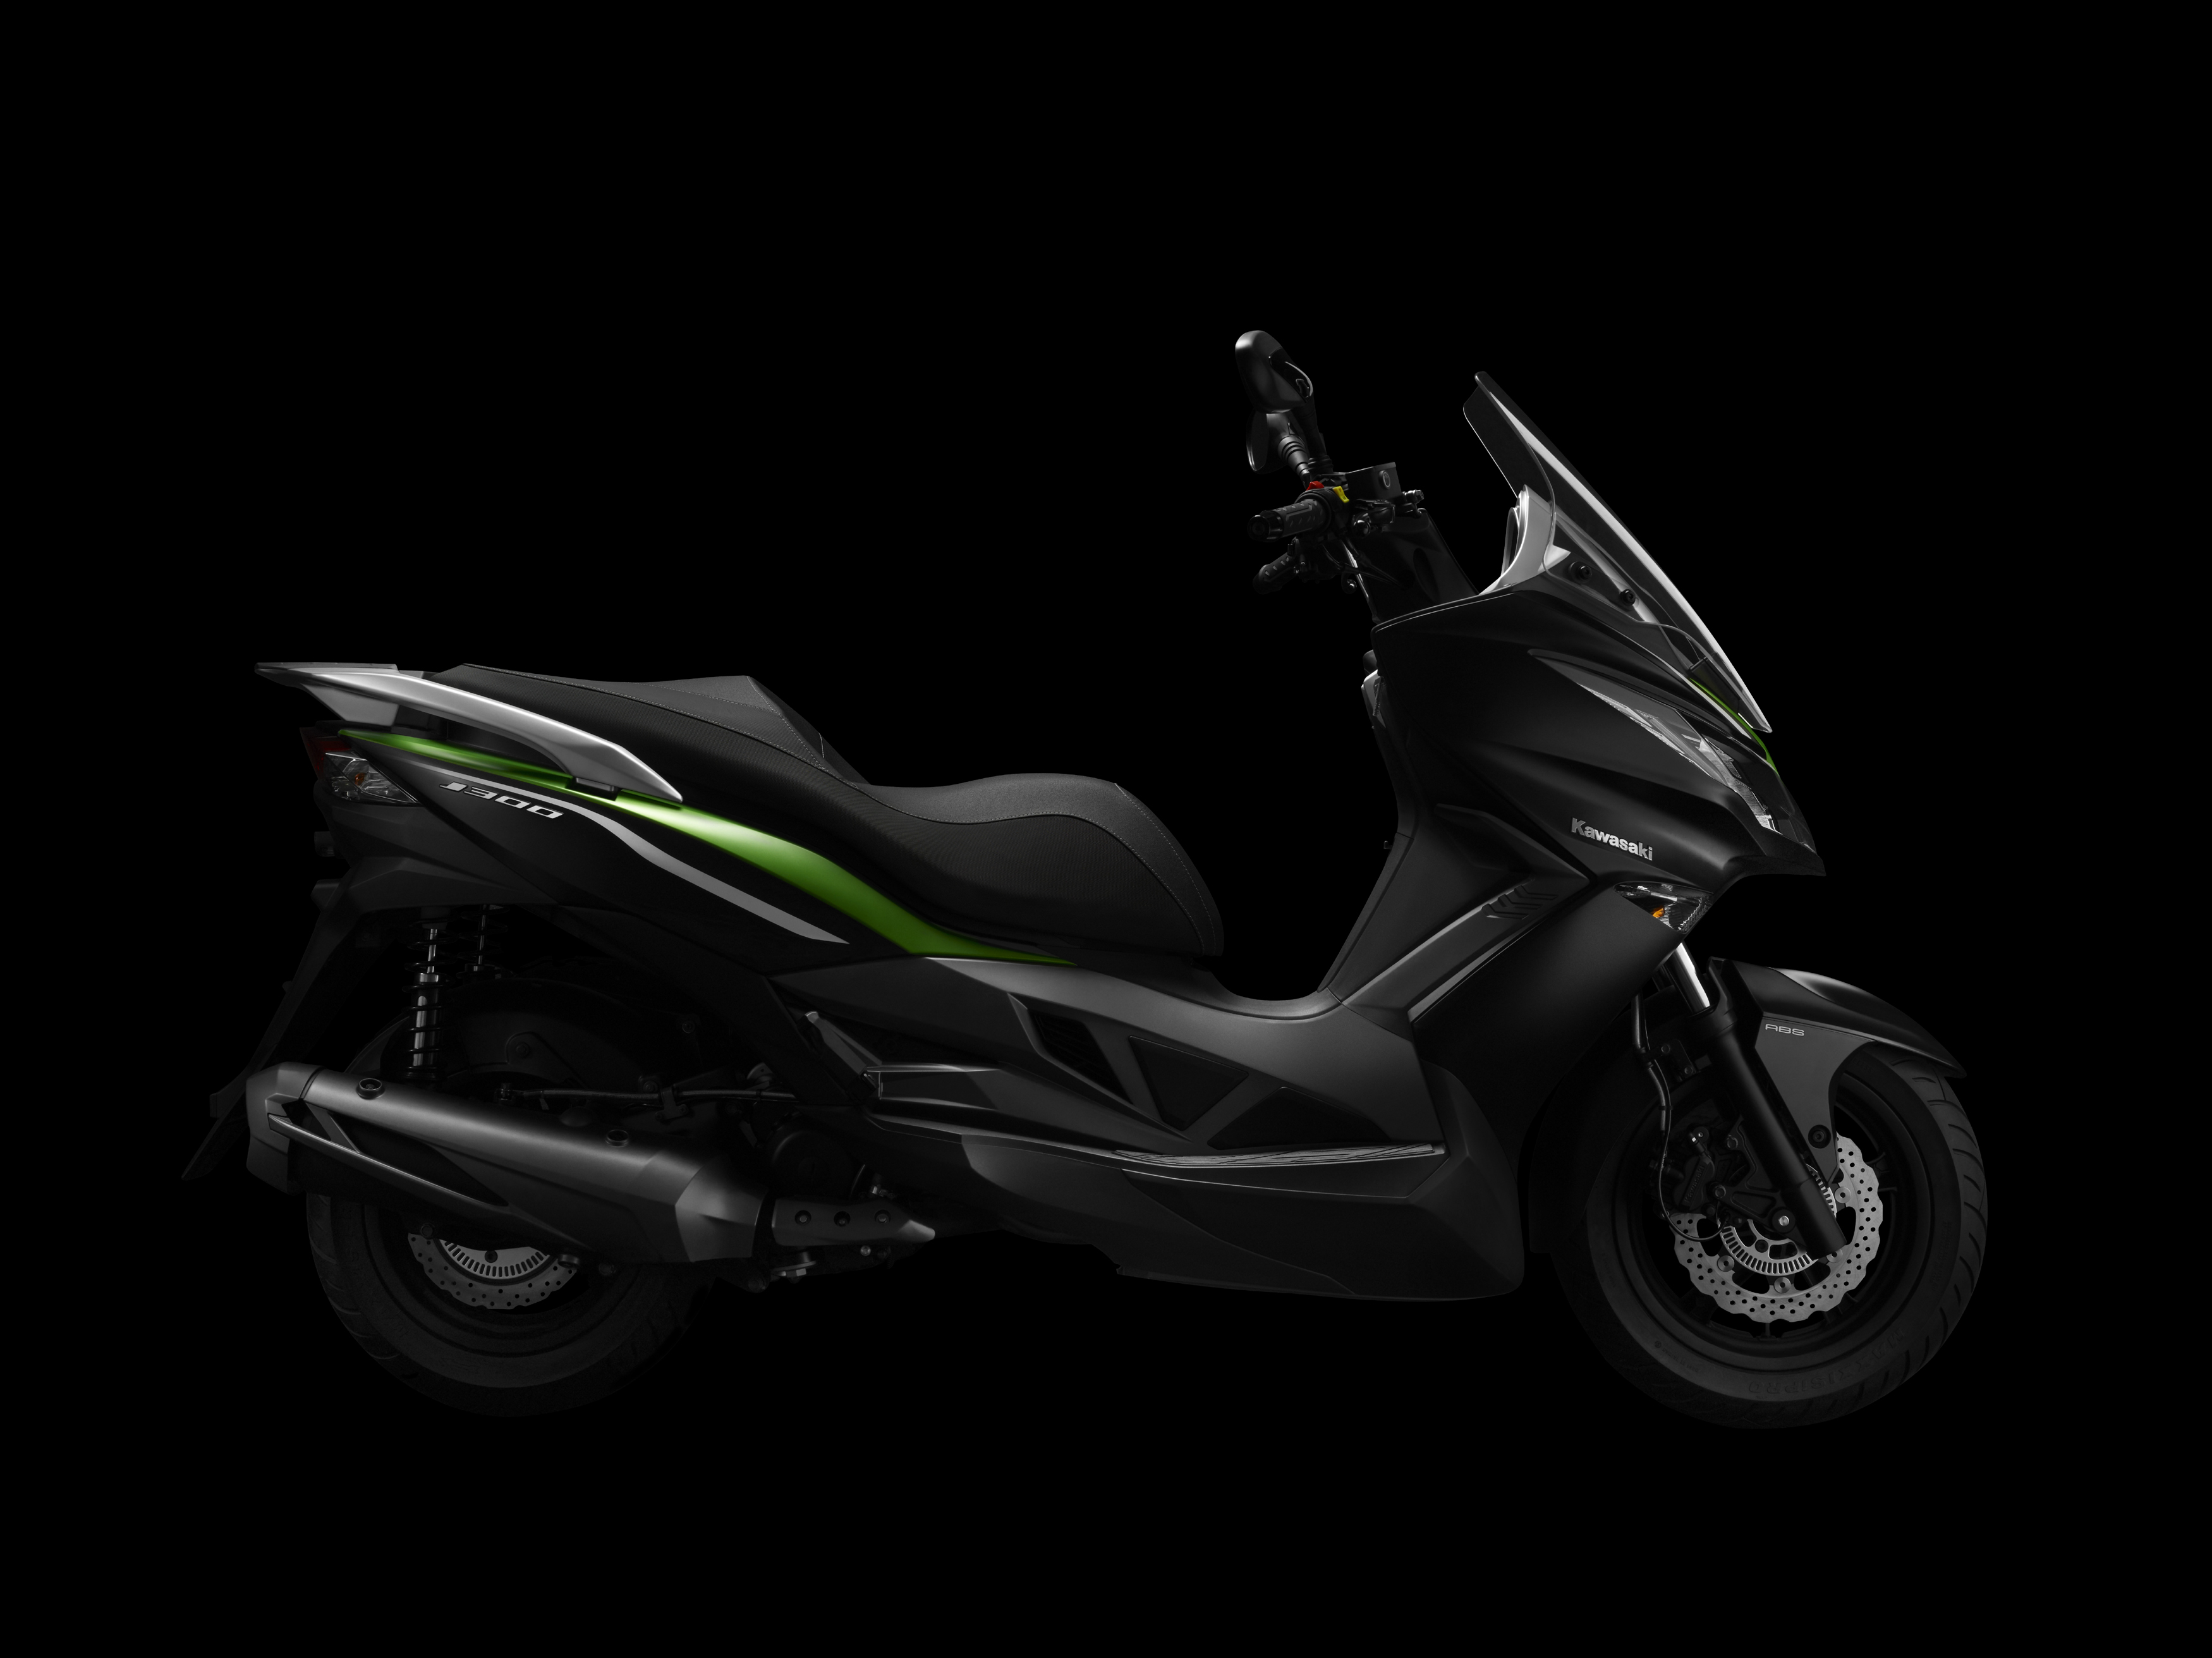 Kawasaki J300 scooter confirmed